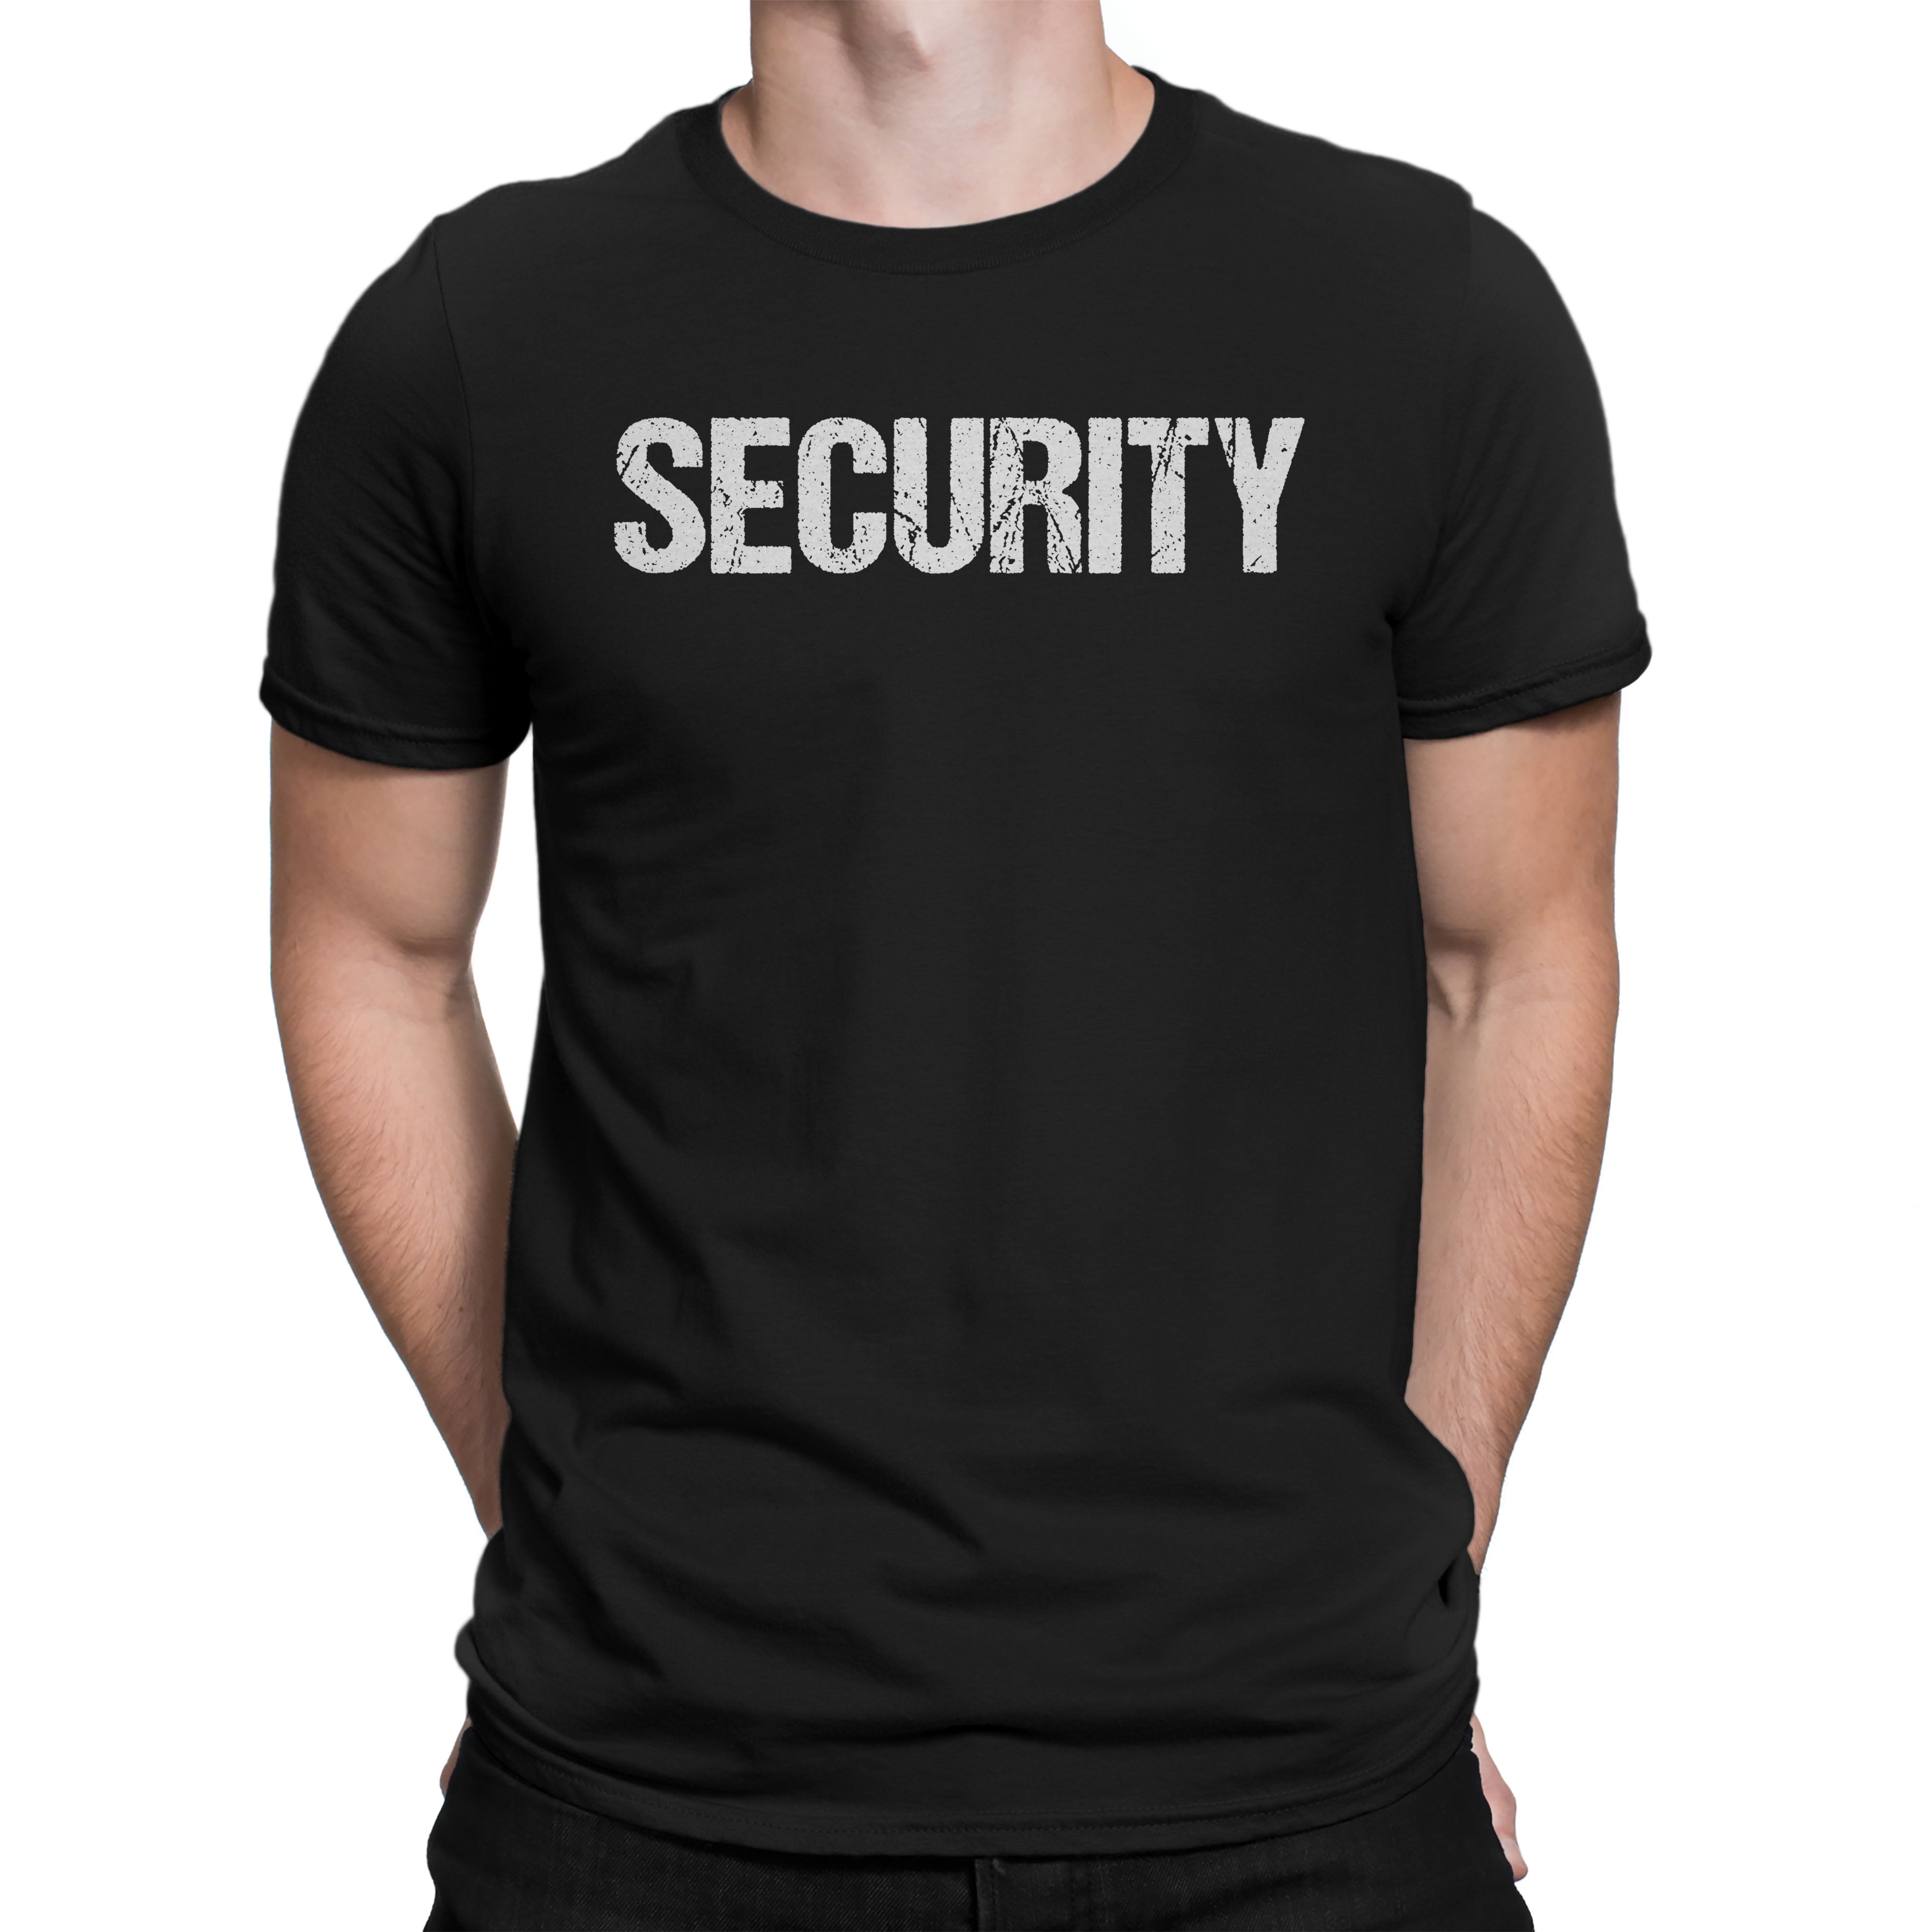 Security Tee Shirts Sale 50% coupon Amazon Prime Deal